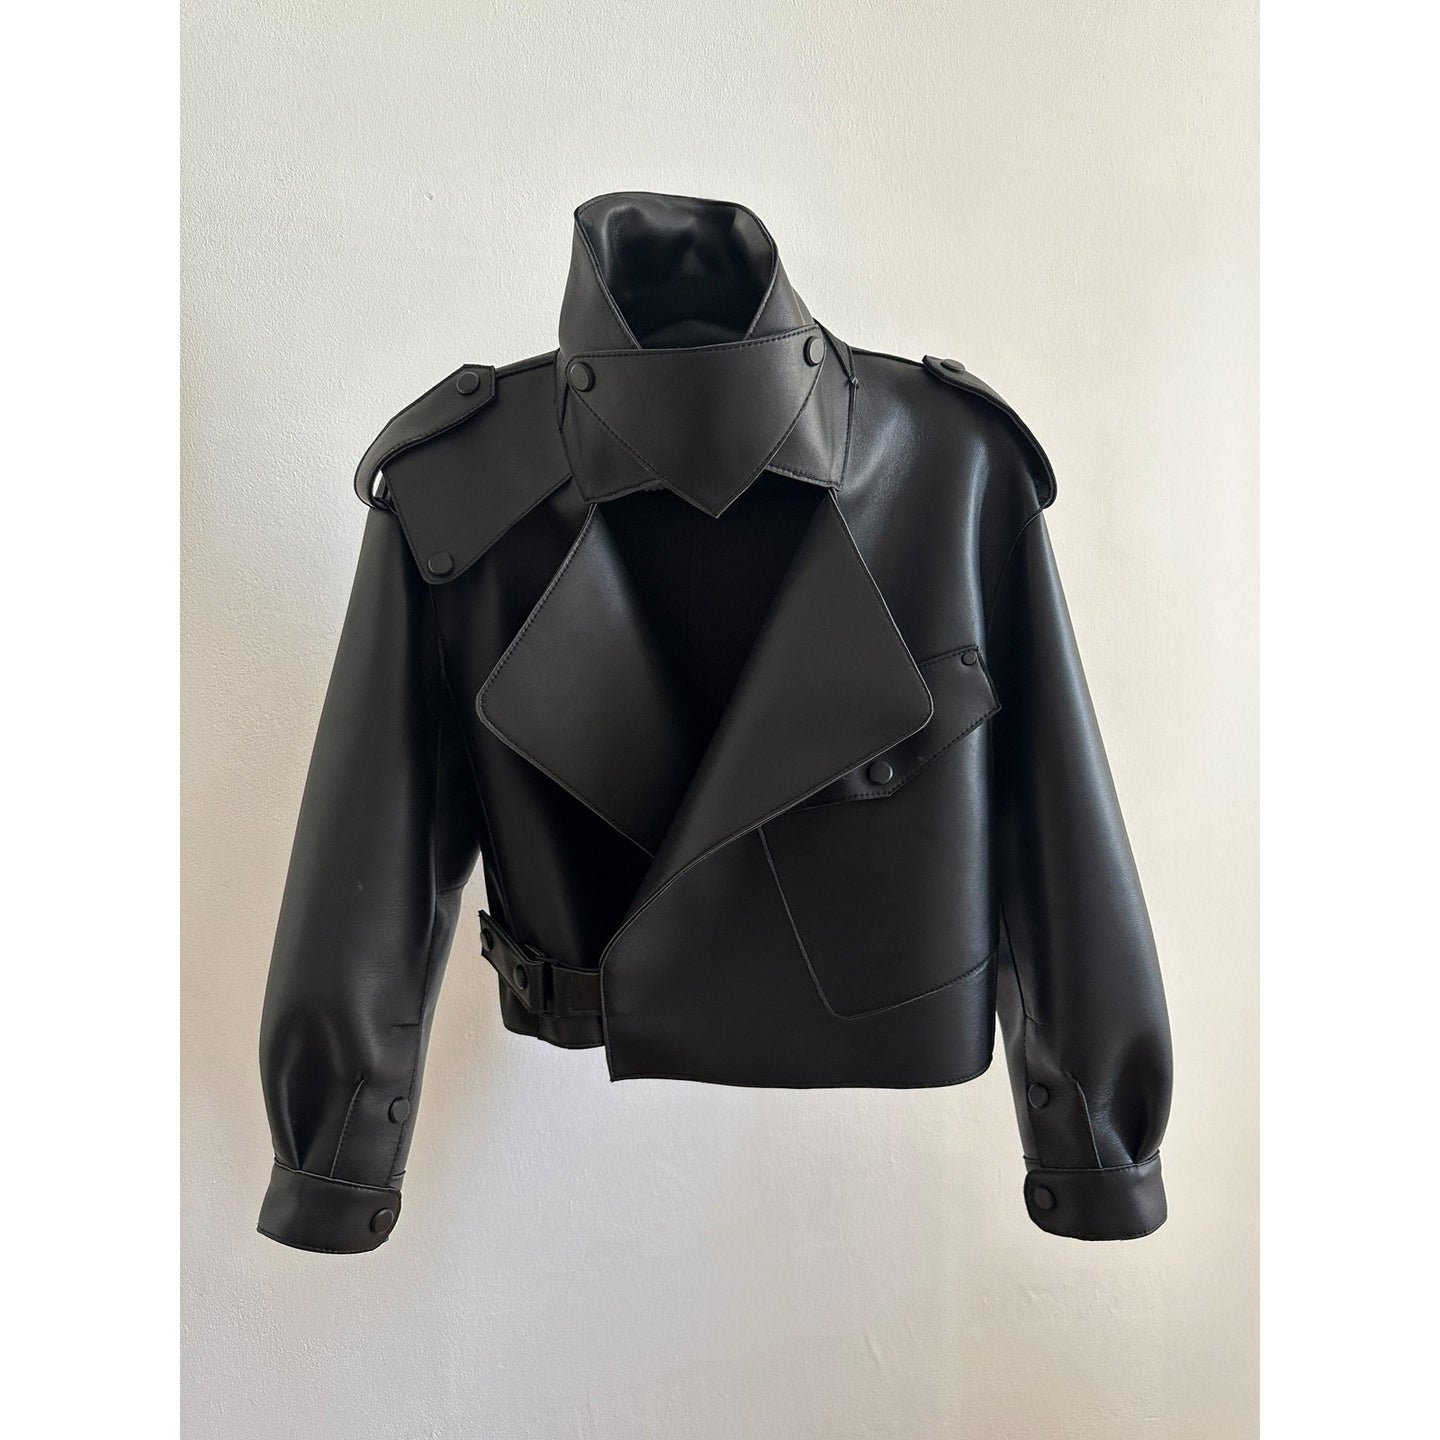 Jack| Oversized Leather Crop Jacket - Cielie